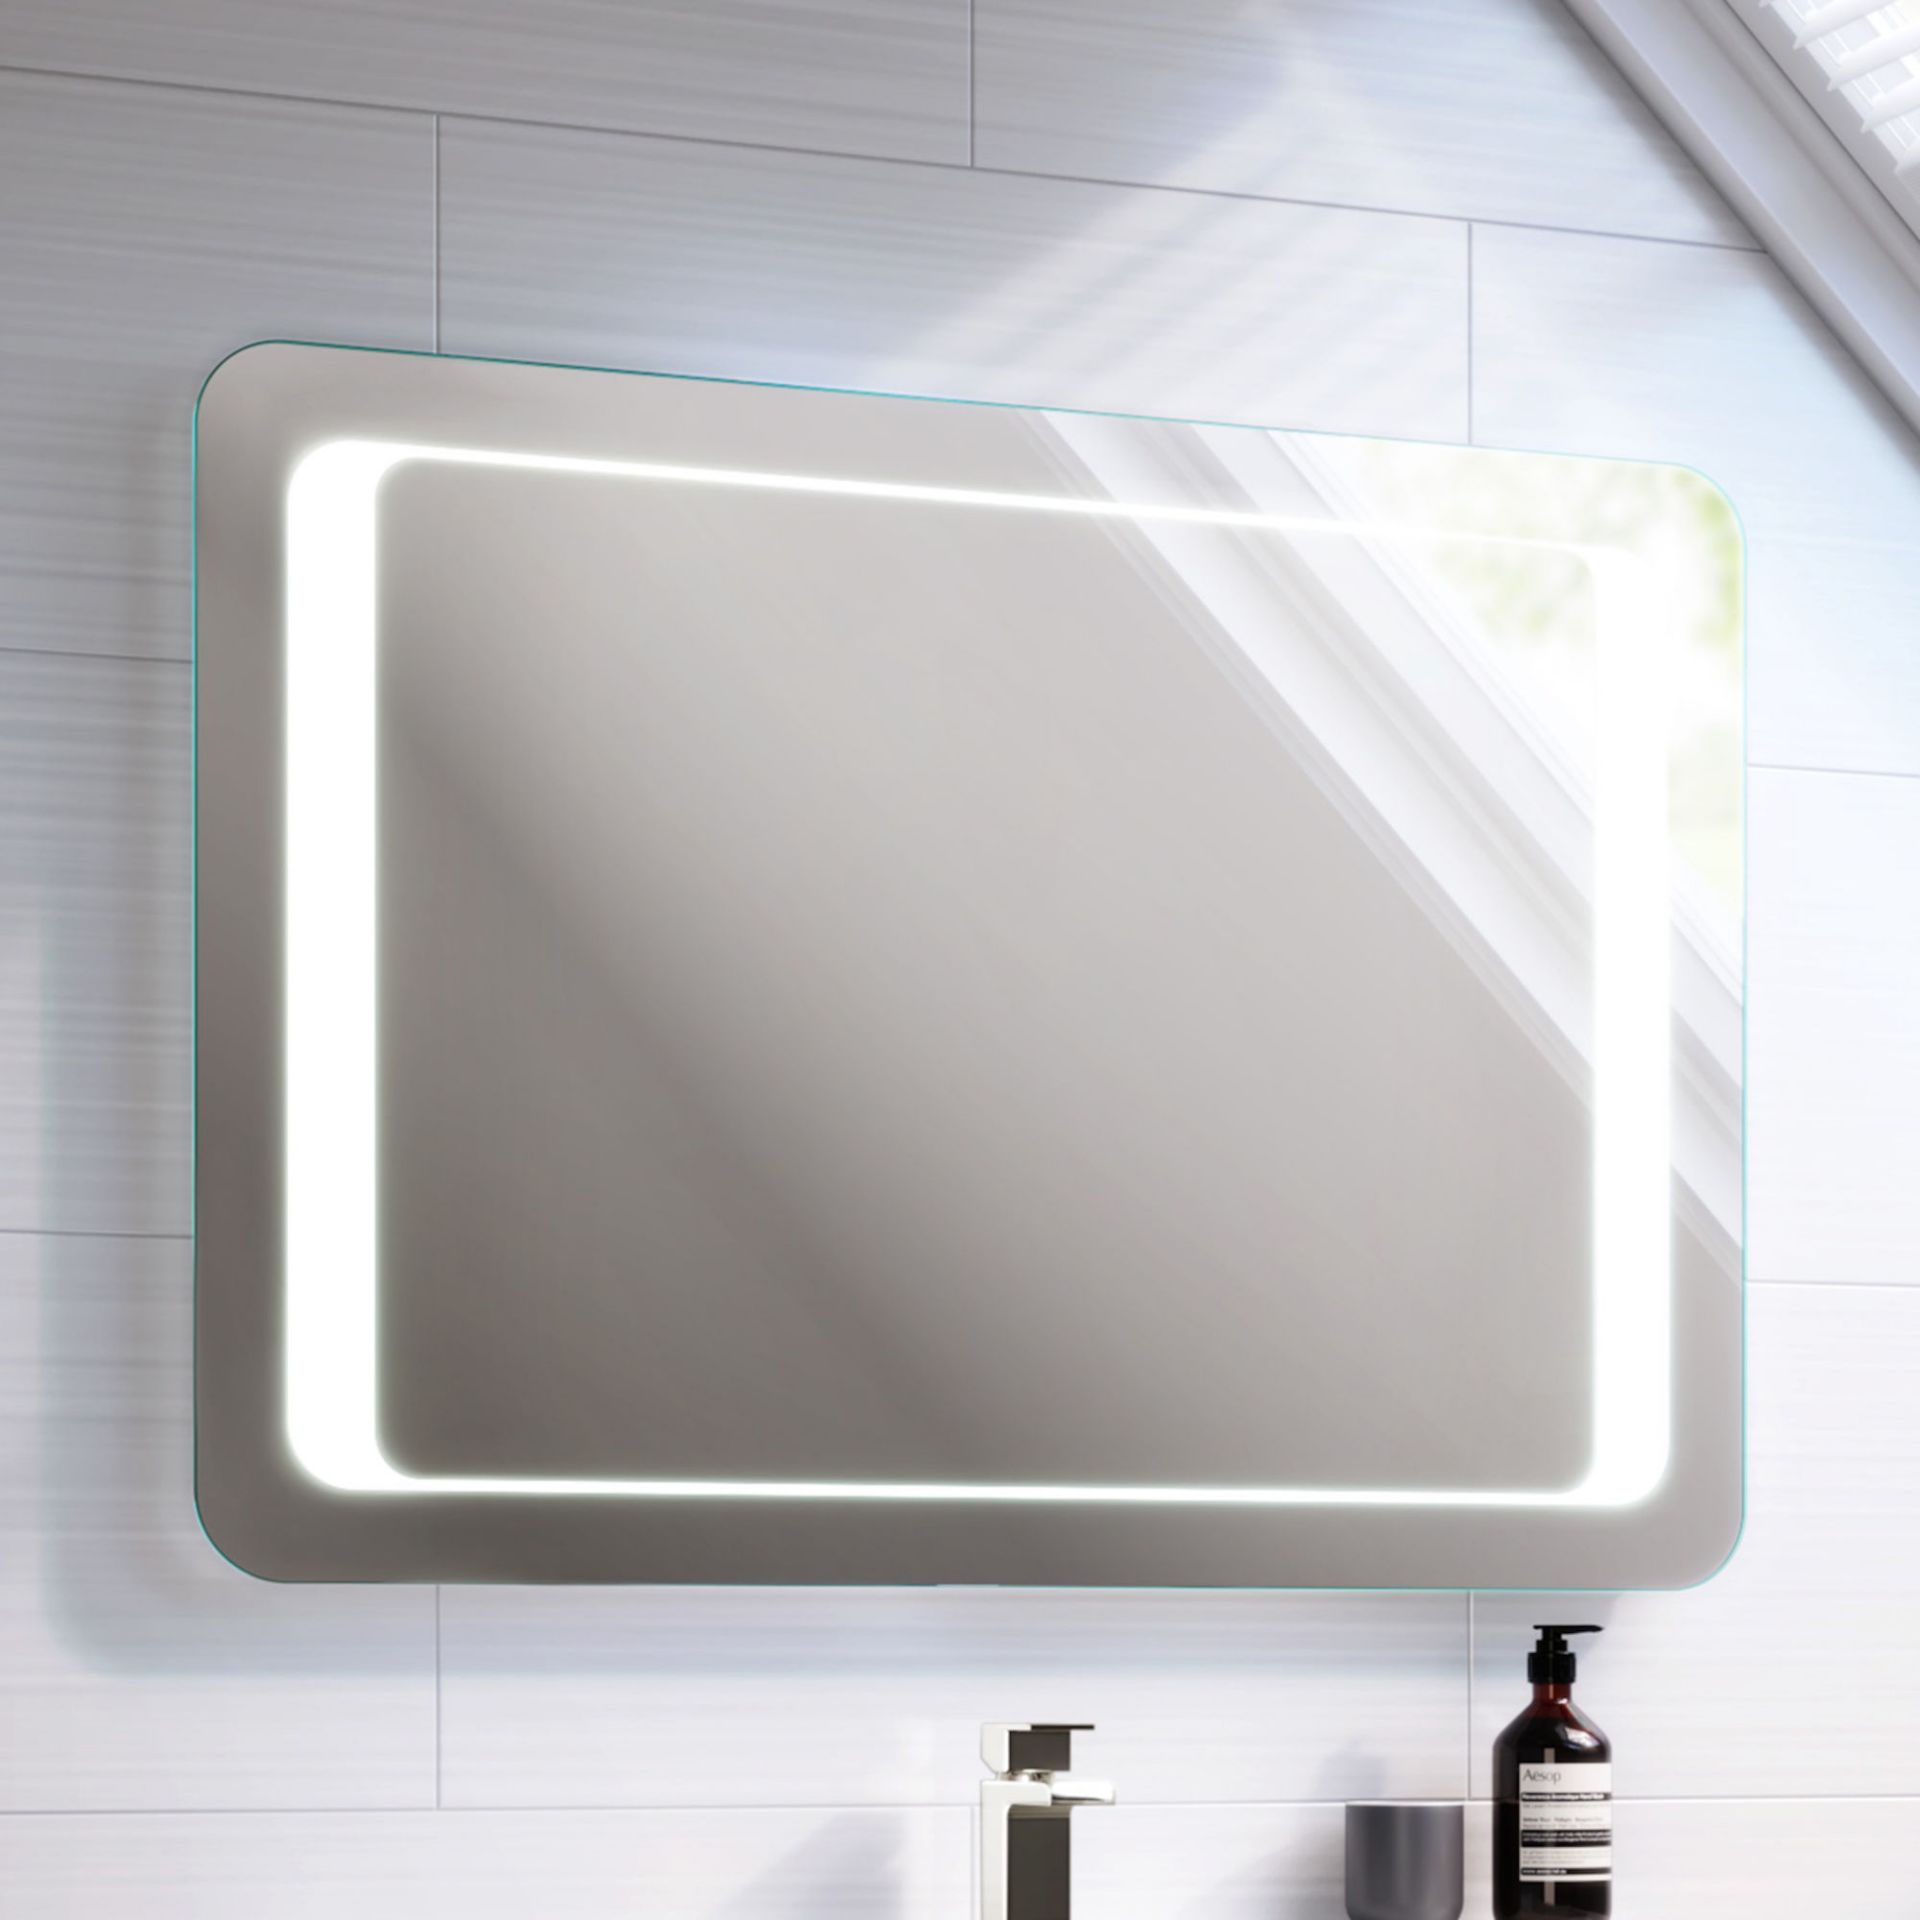 (LP173) 650x900mm Quasar Illuminated LED Mirror. RRP £349.99. Energy efficient LED lighting with